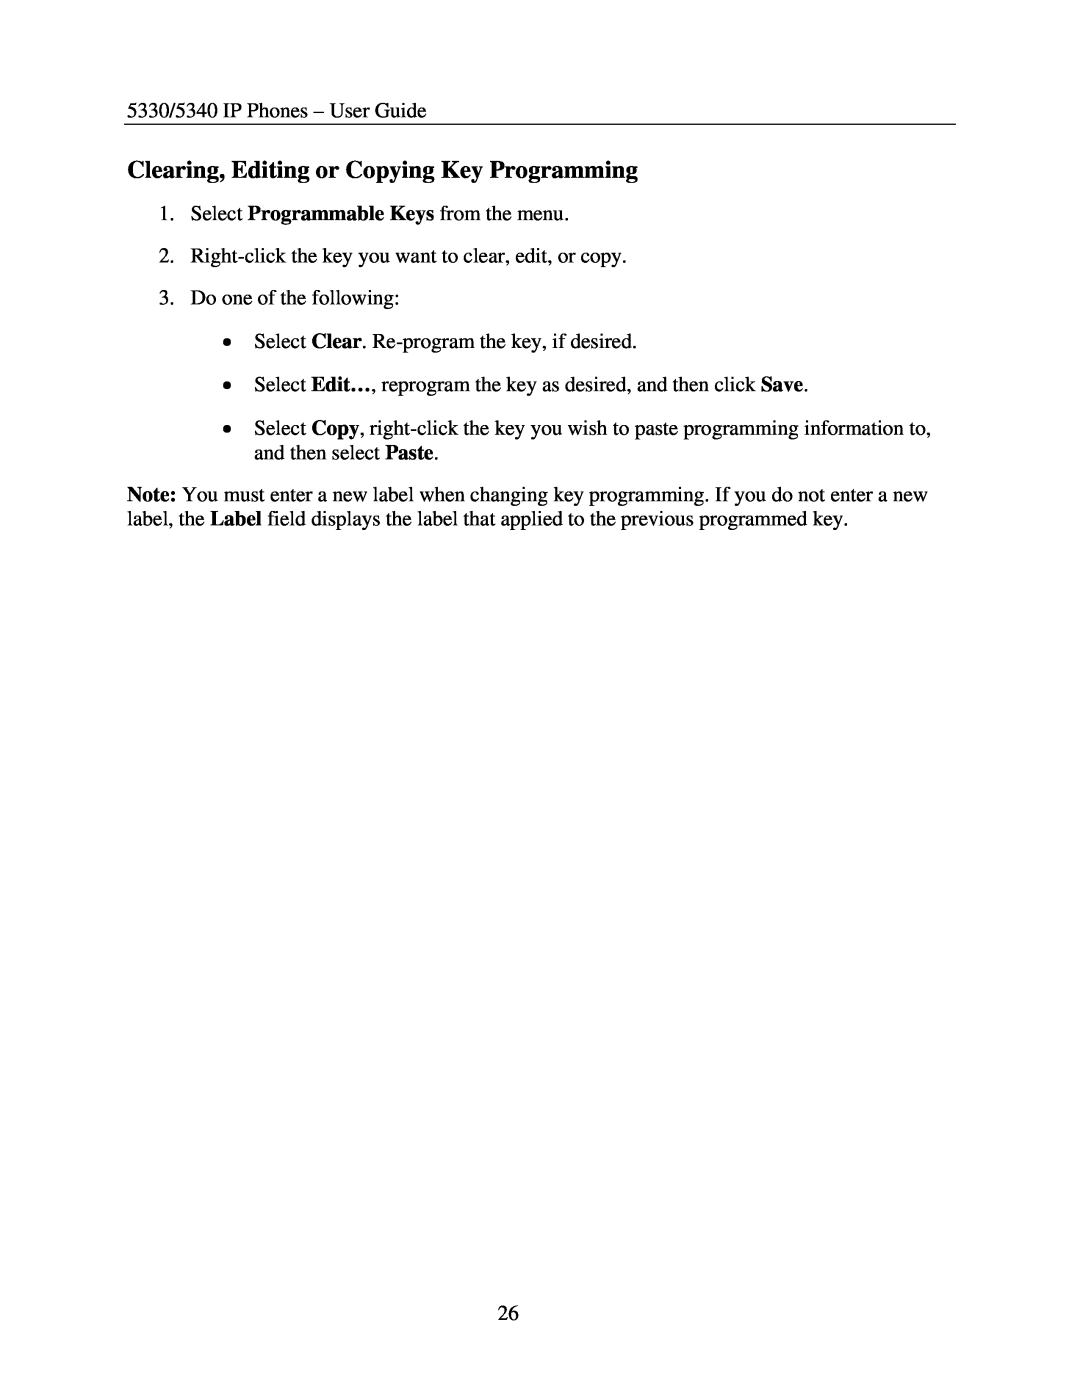 Mitel 5340, 5330 manual Clearing, Editing or Copying Key Programming 